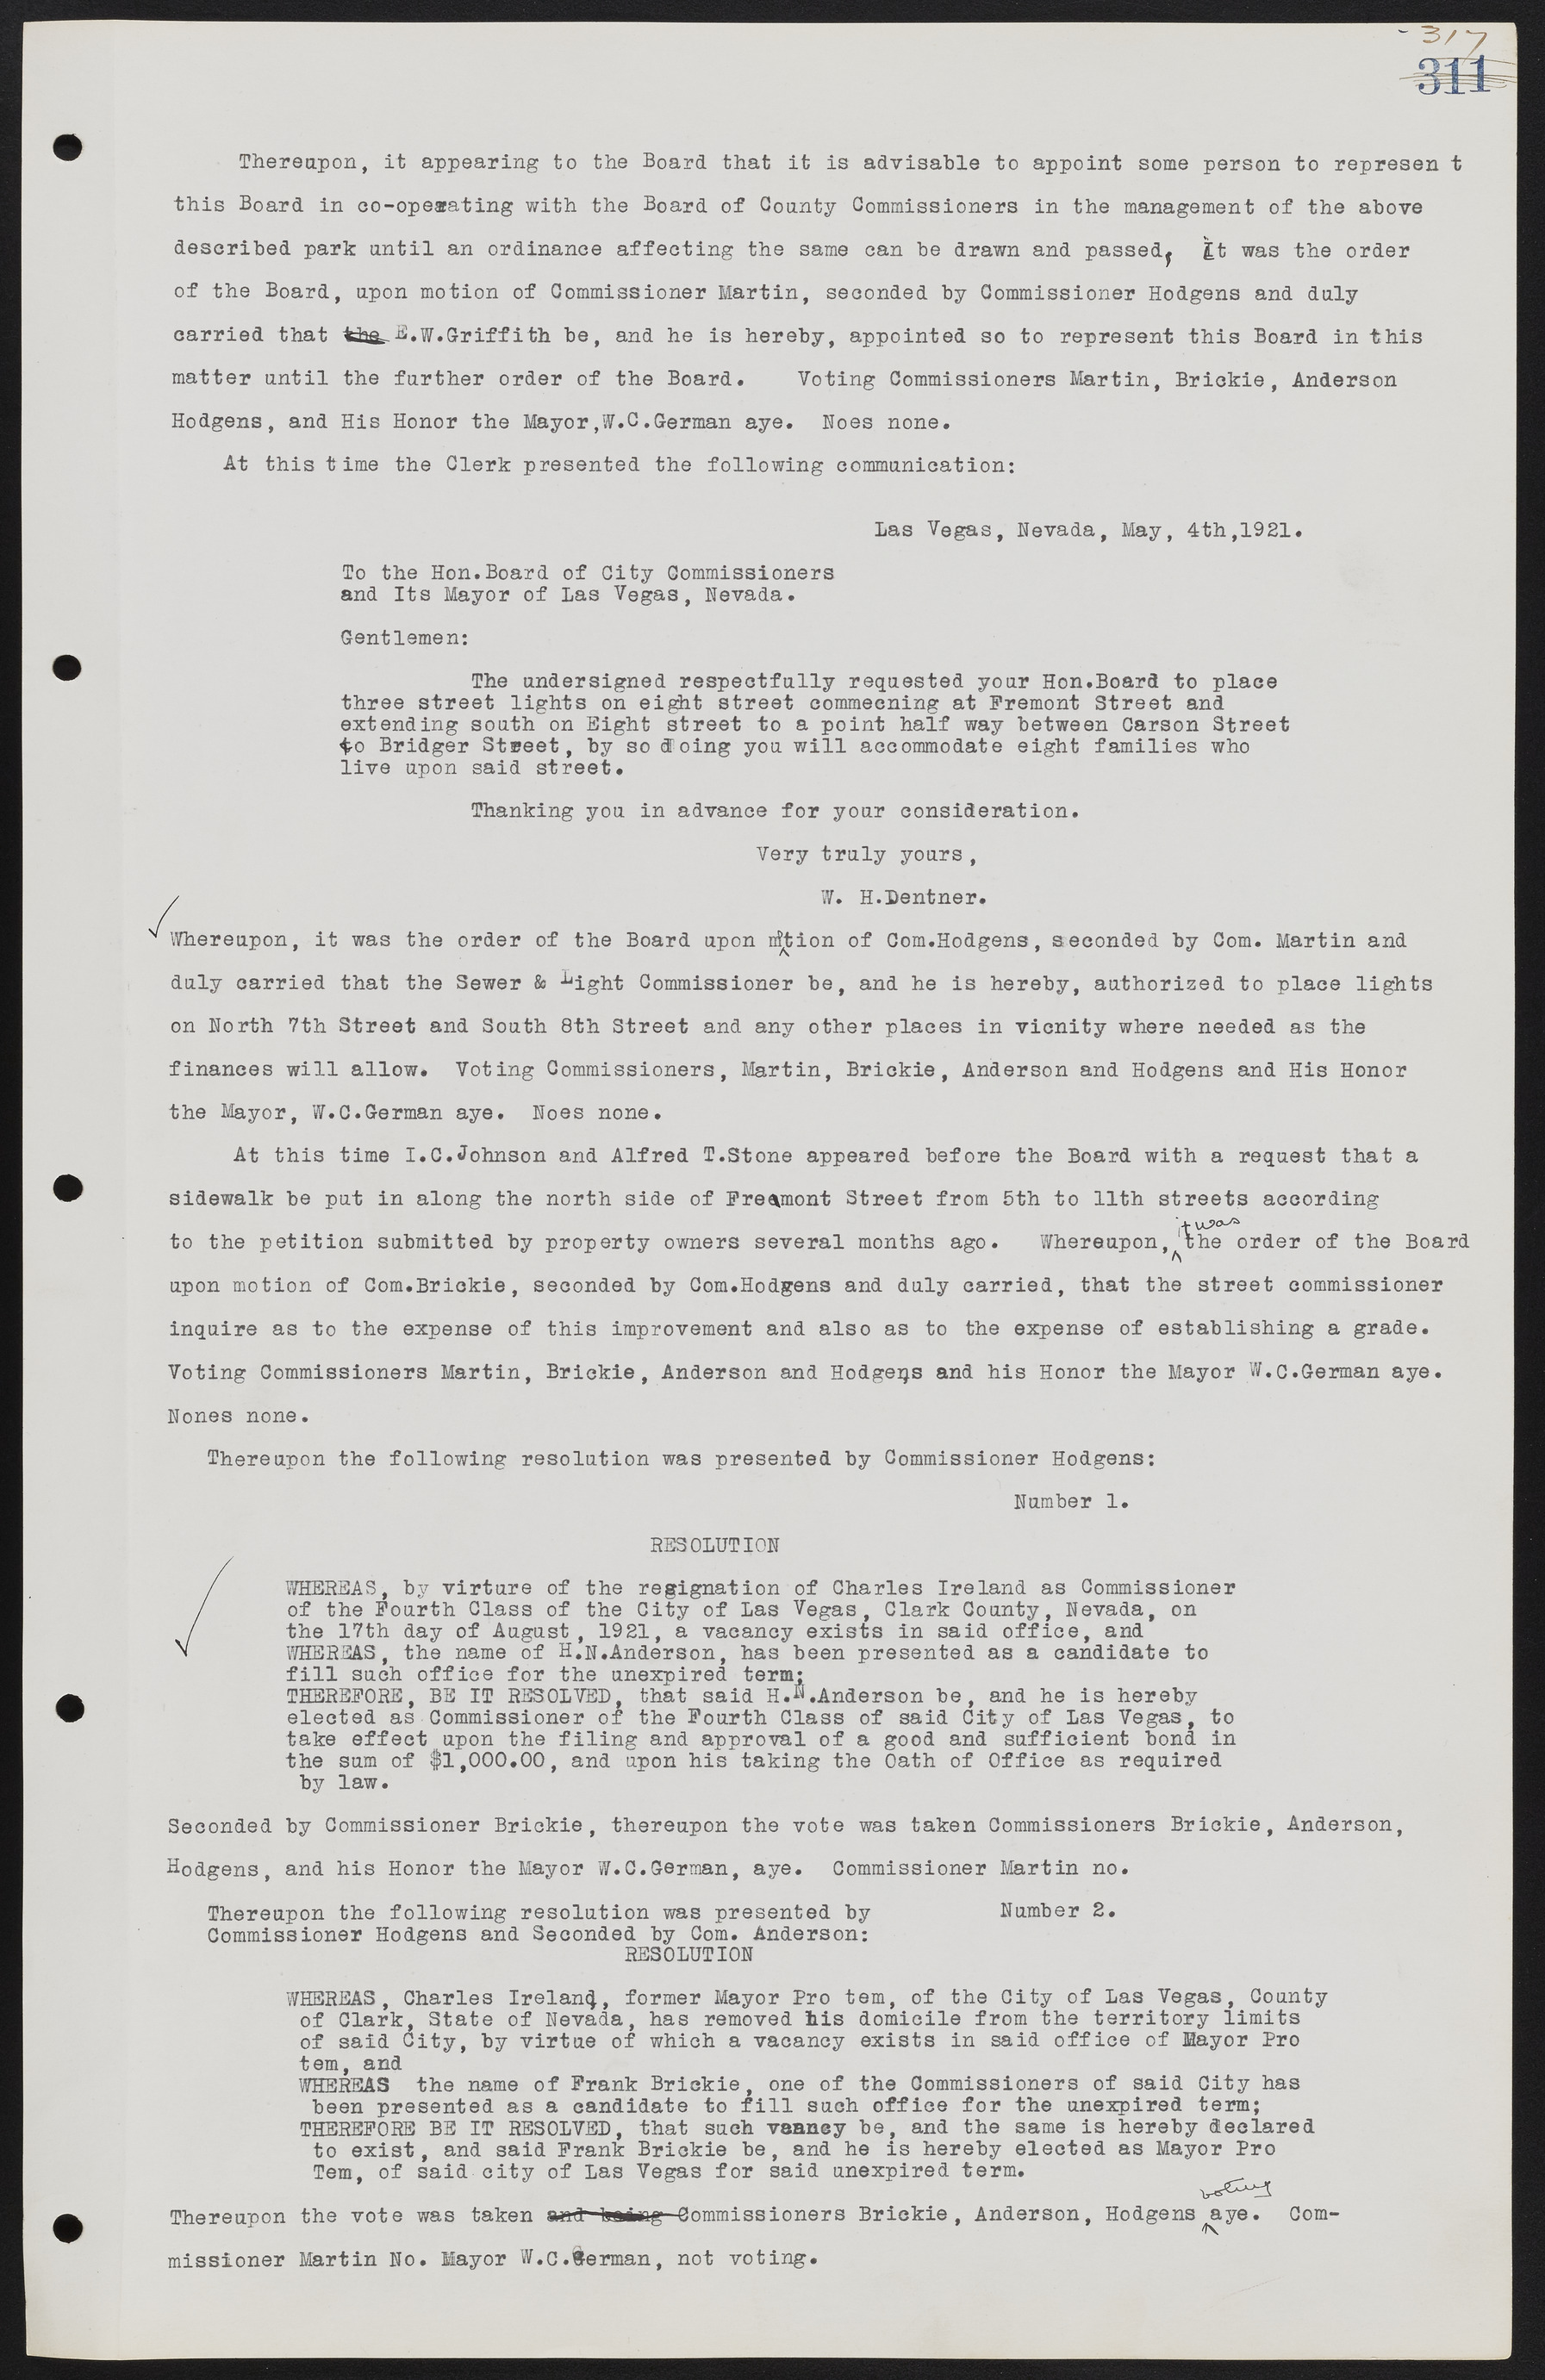 Las Vegas City Commission Minutes, June 22, 1911 to February 7, 1922, lvc000001-333